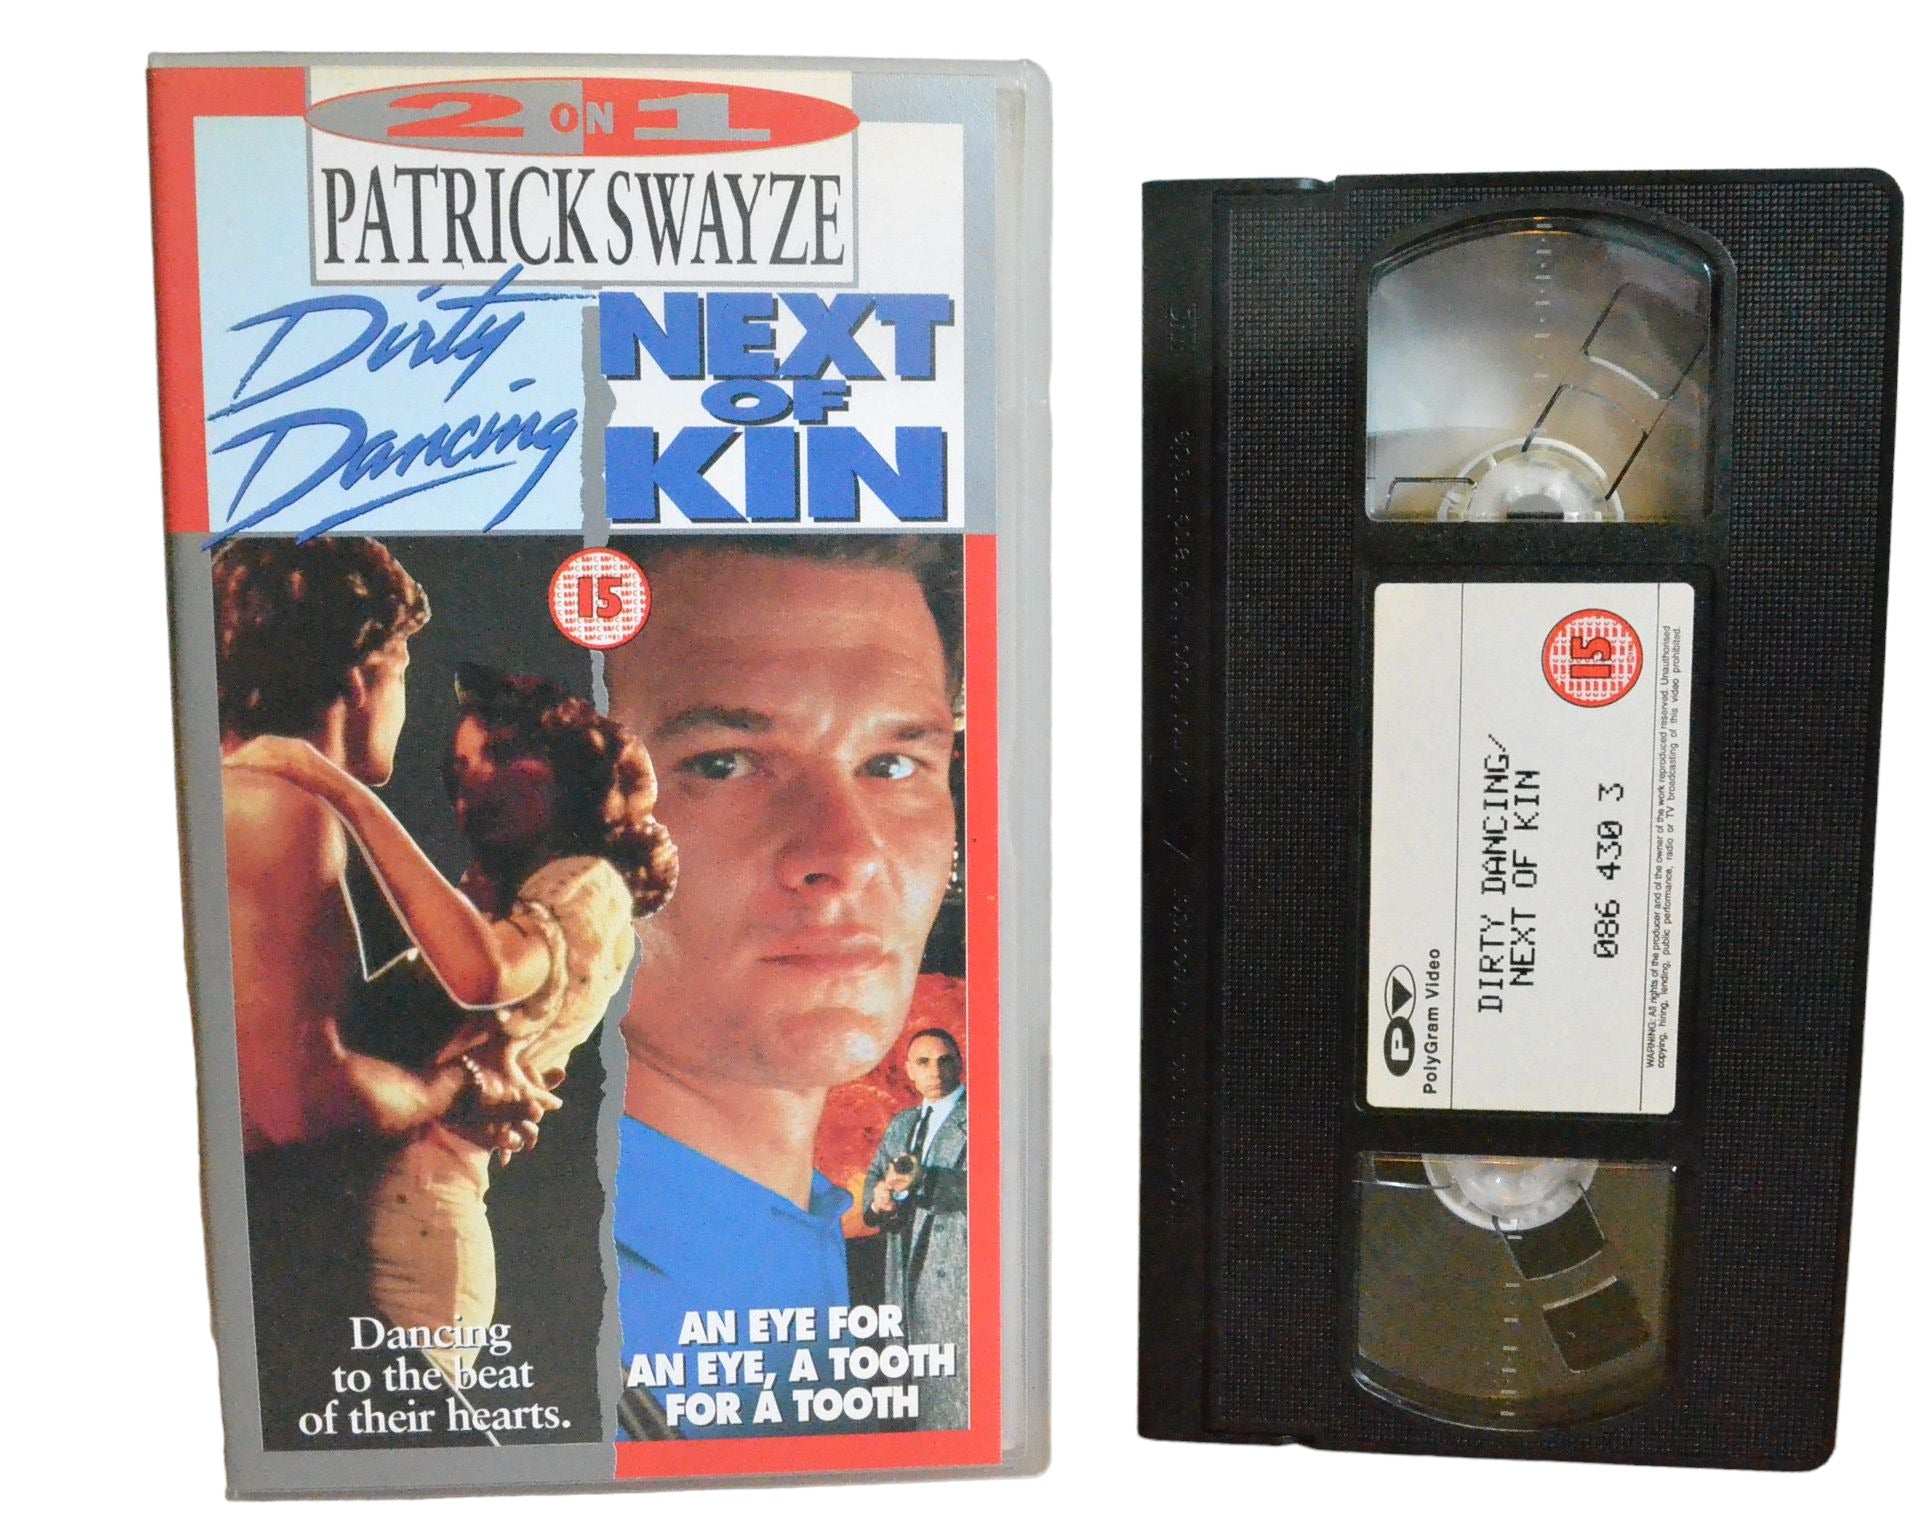 Drity Dancing / Next Of Kin - Patrick Swayze - PolyGram Video - 864303 - Drama - Pal - VHS-